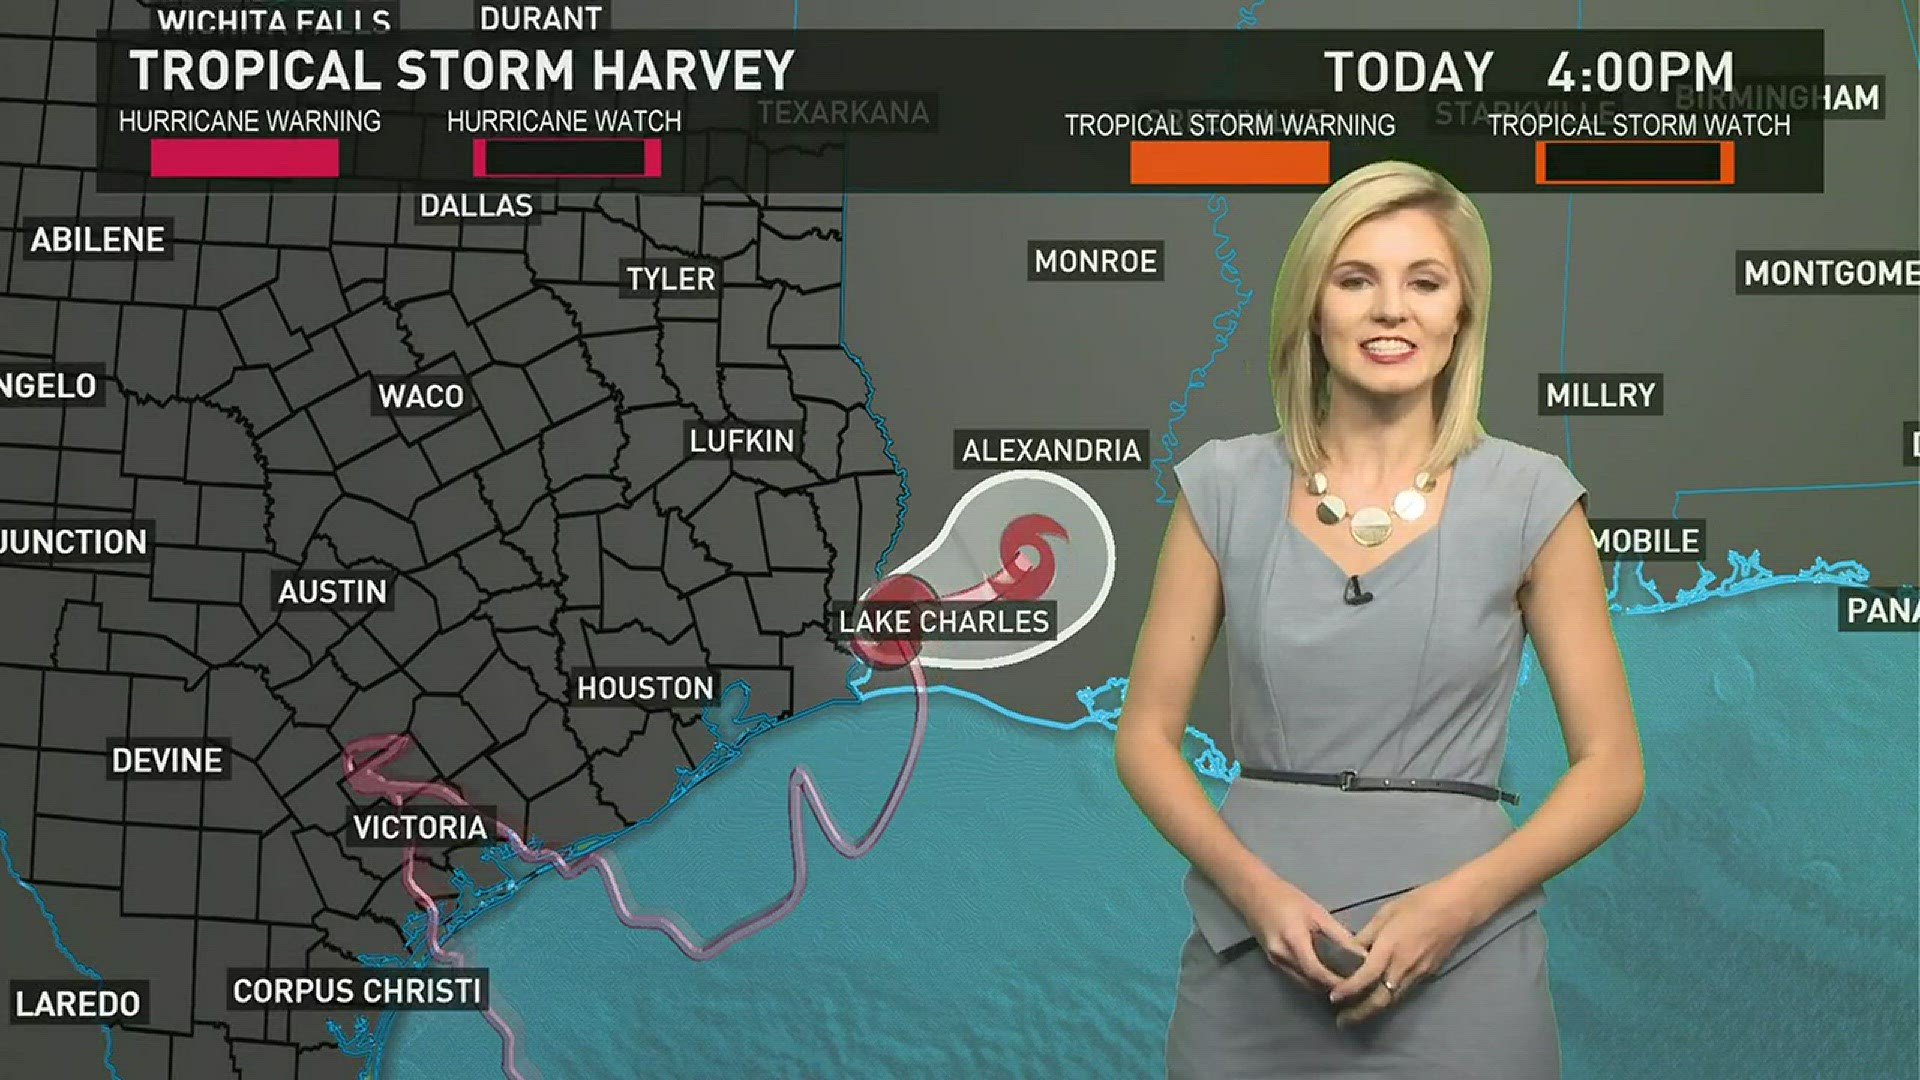 Harvey makes landfall once again bringing rain back into East Texas